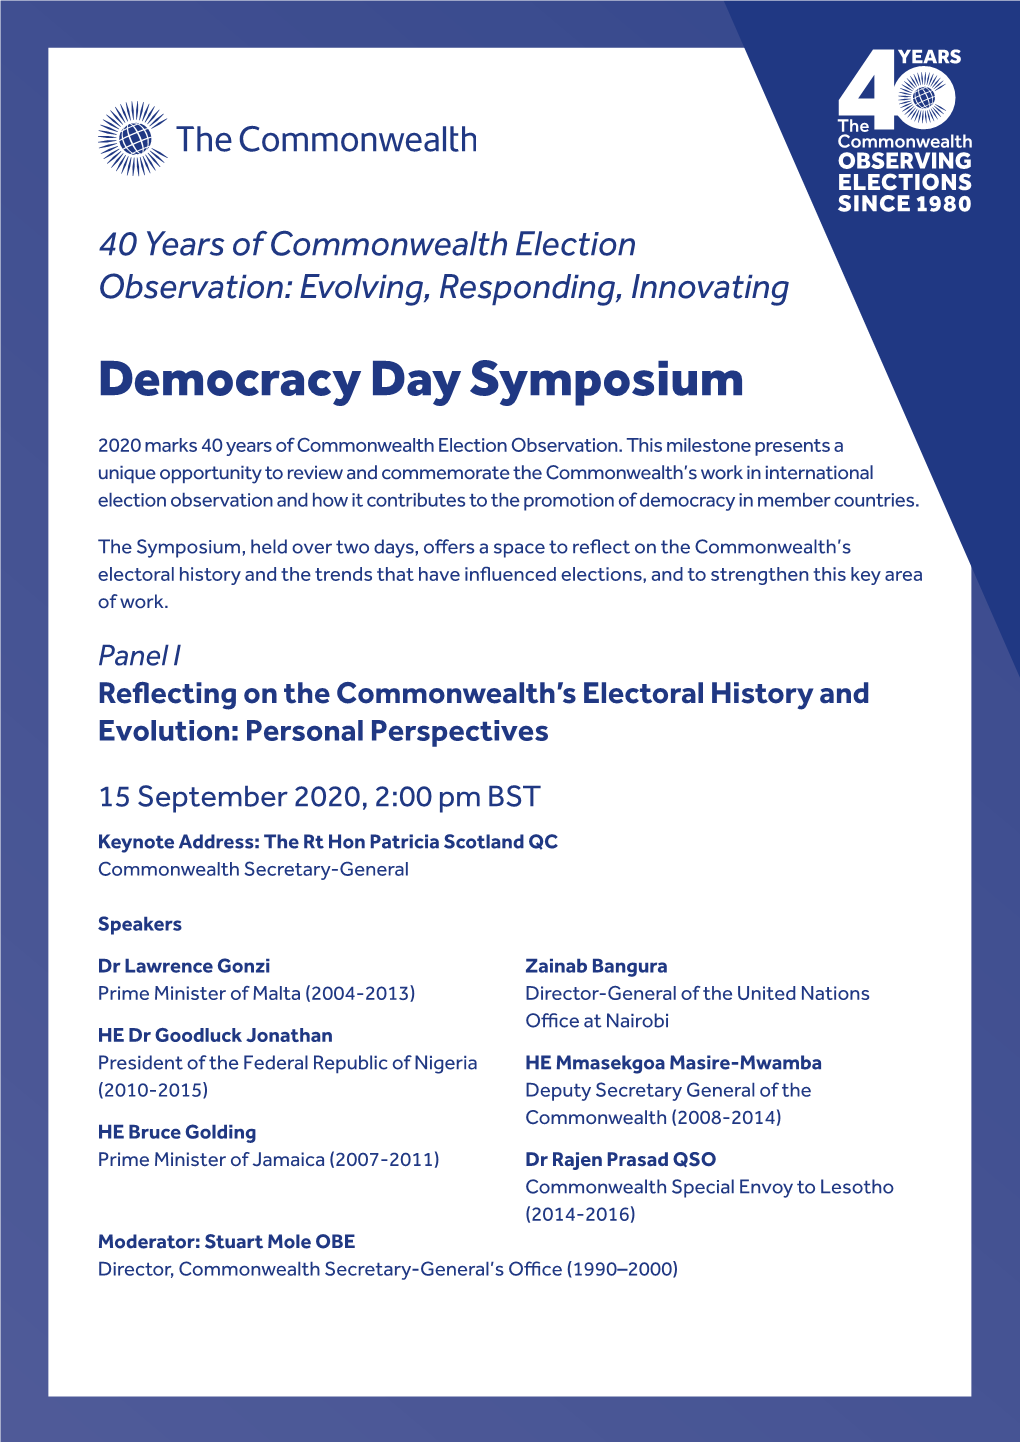 Democracy Day Symposium